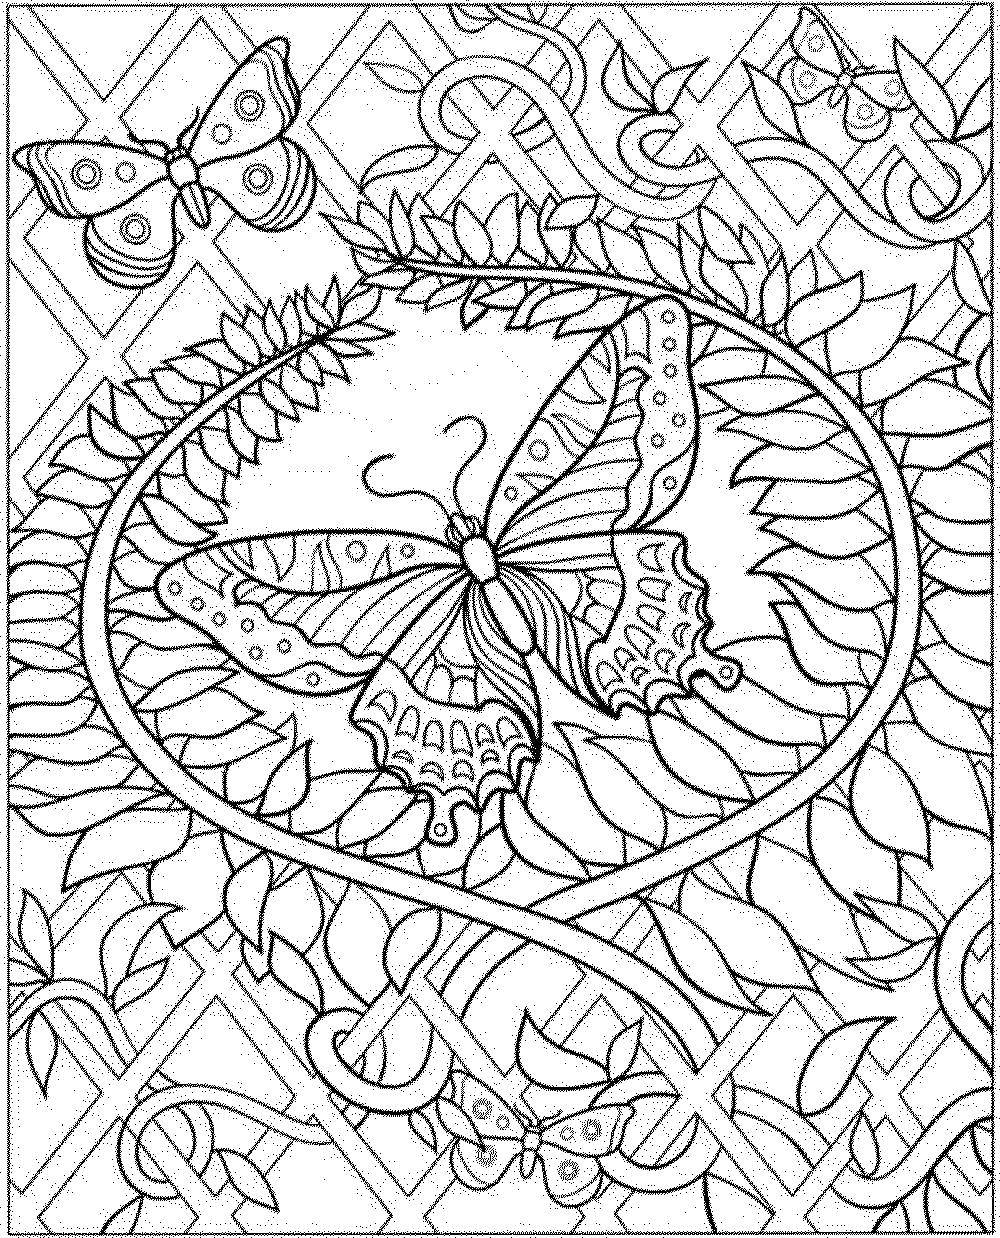 Название: Раскраска Сад с бабочками. Категория: бабочки. Теги: Бабочка.